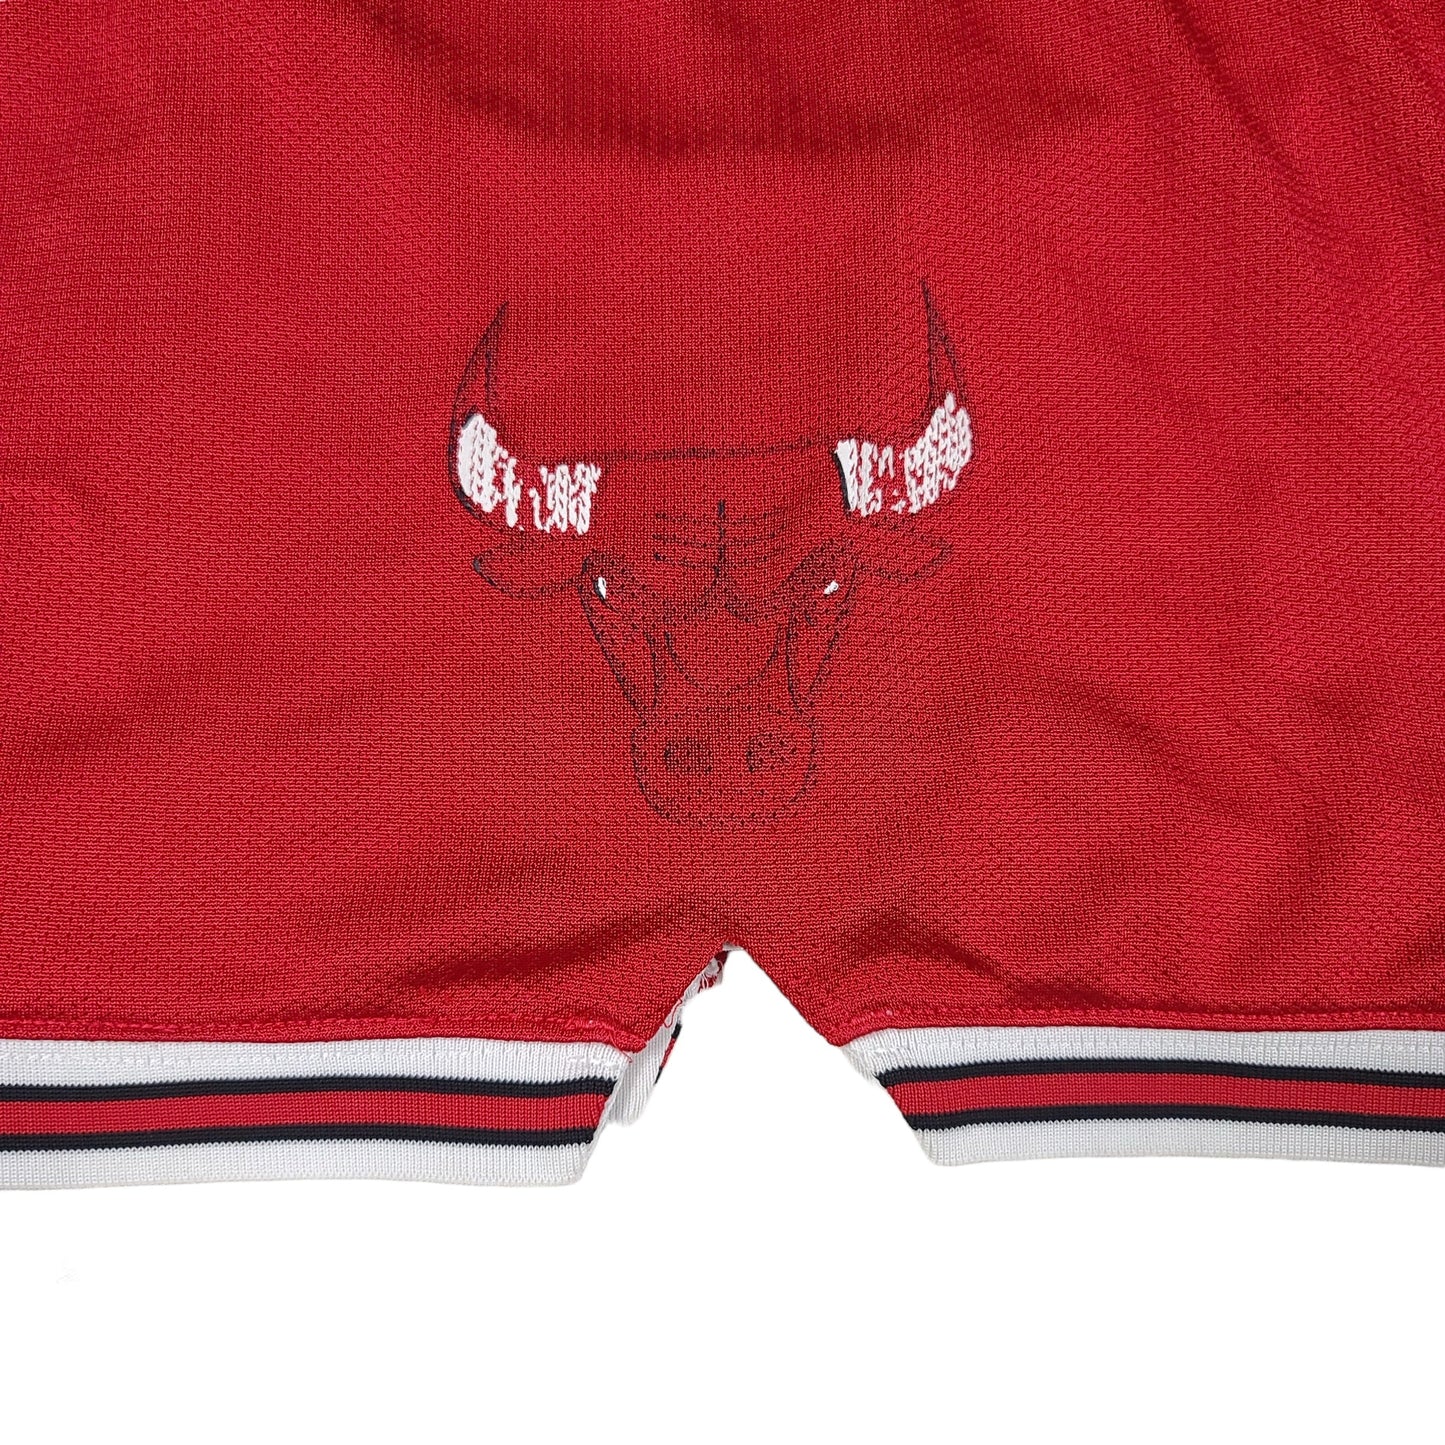 Vintage 90's Chicago Bulls Red Nike Basketball Shorts